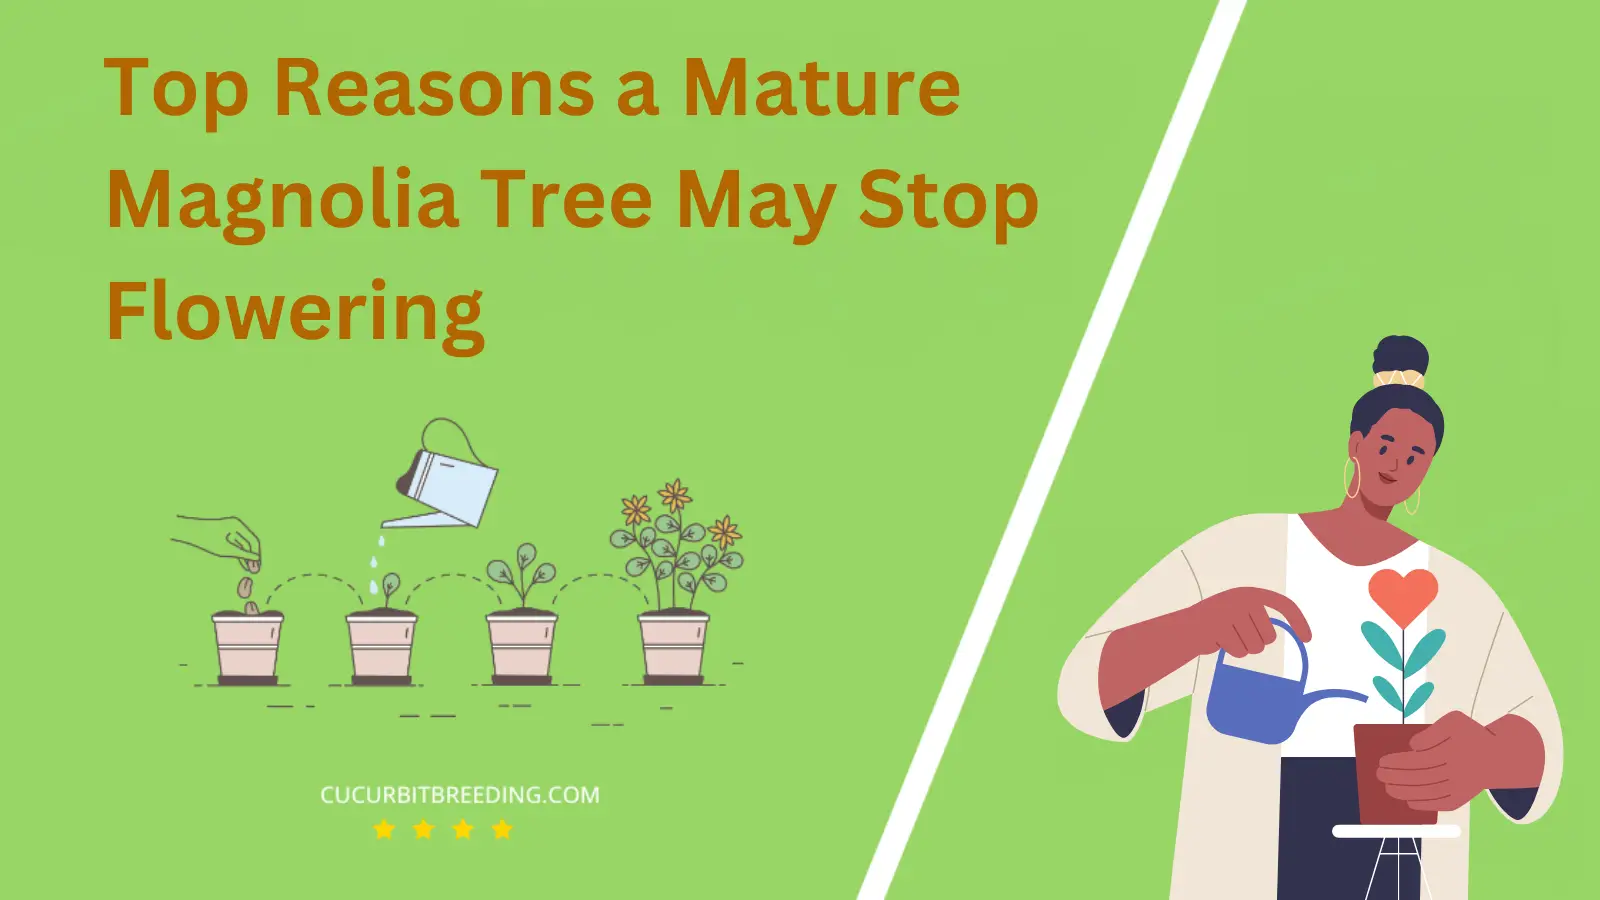 Top Reasons a Mature Magnolia Tree May Stop Flowering